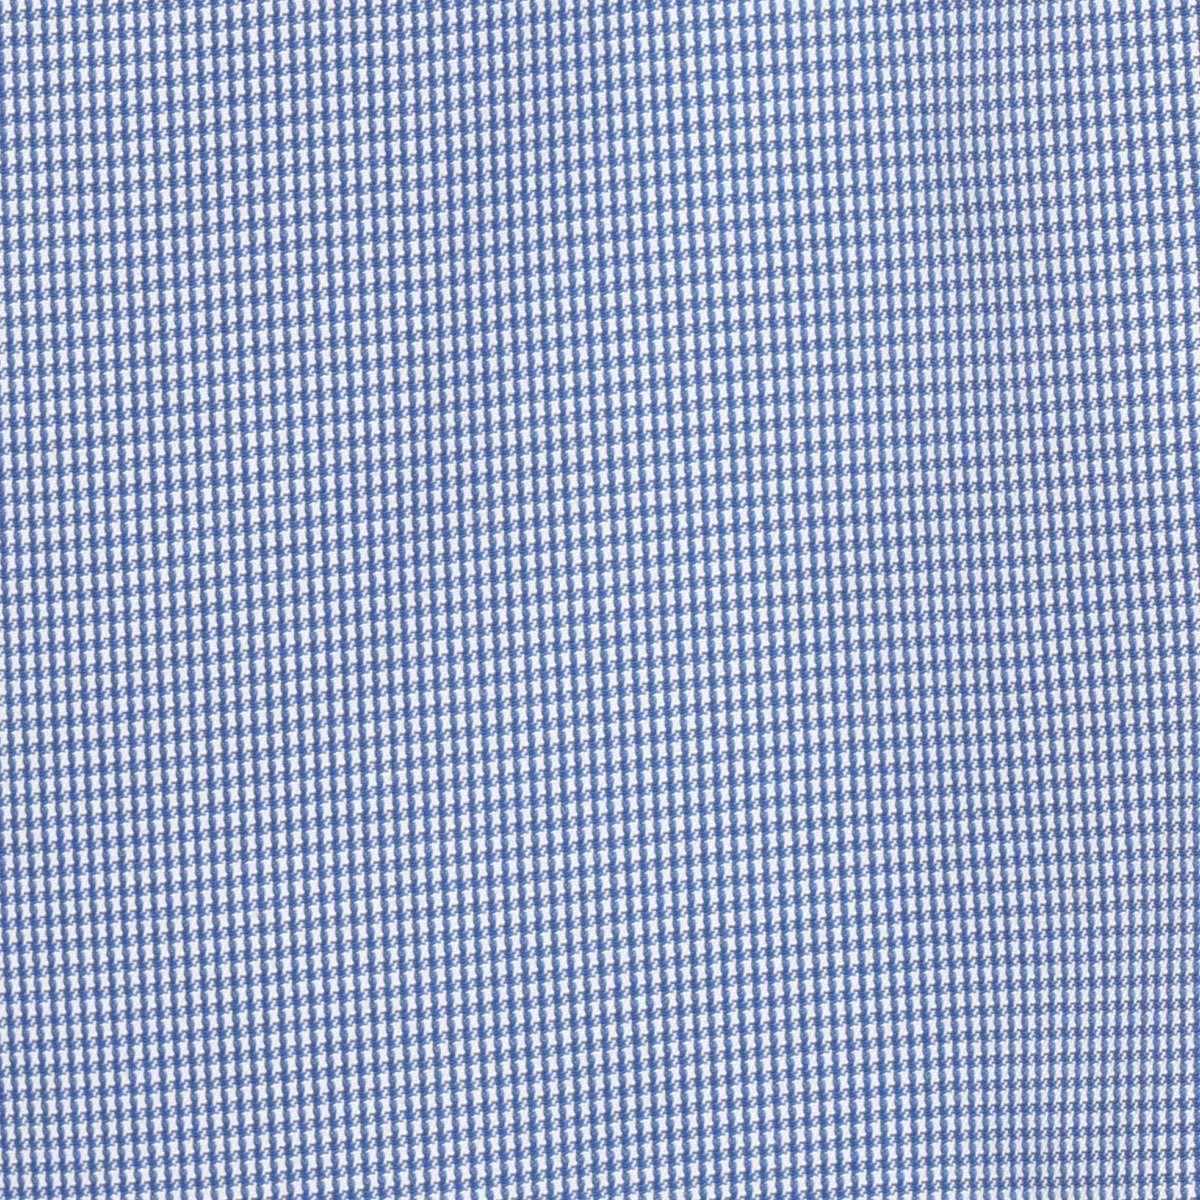 Camisa de Vestir Azul Vasarelli